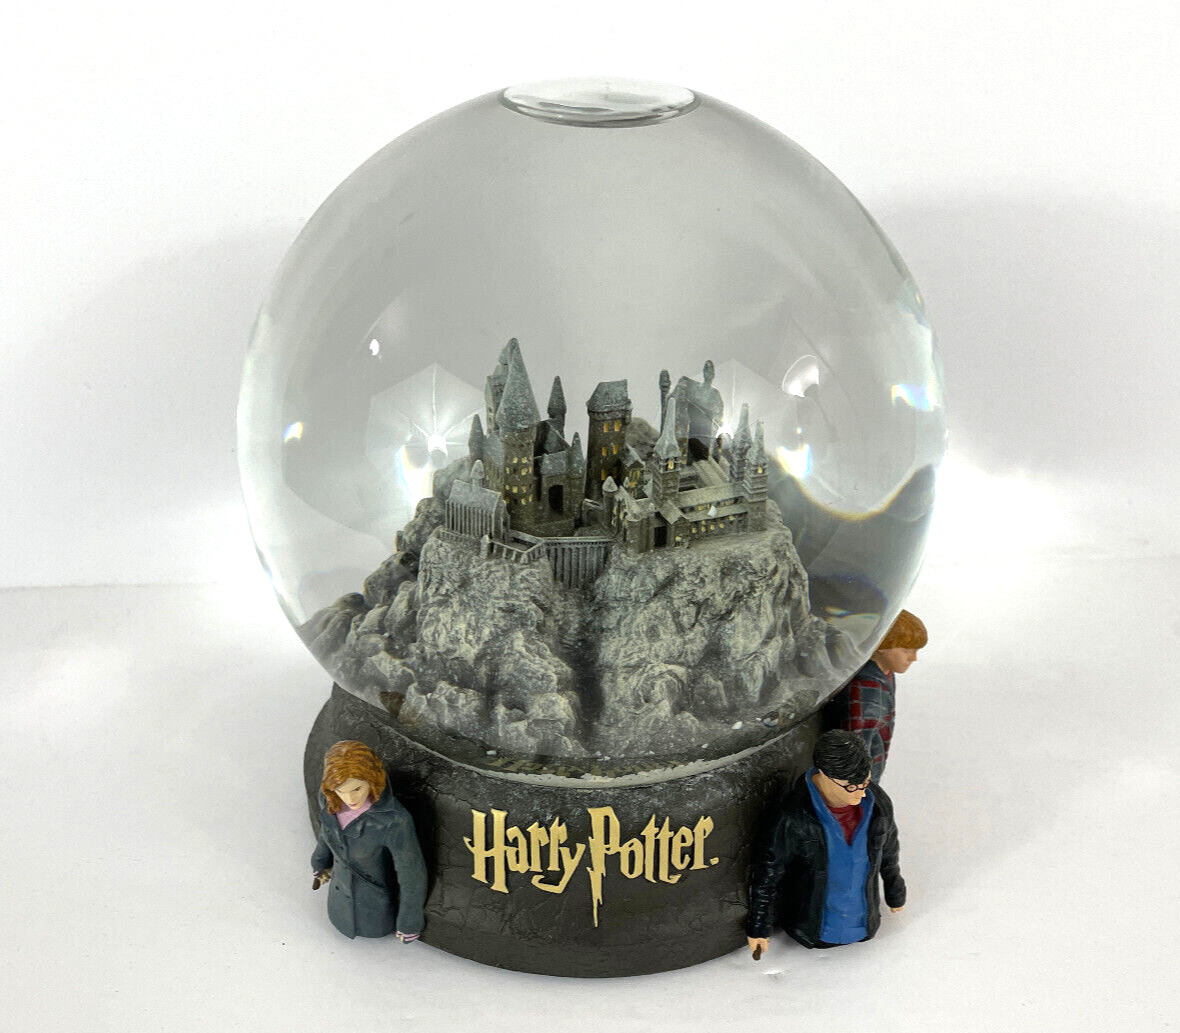 Harry Potter Limited Edition Large Snowglobe Artist's Proof Warner Bros - NEW